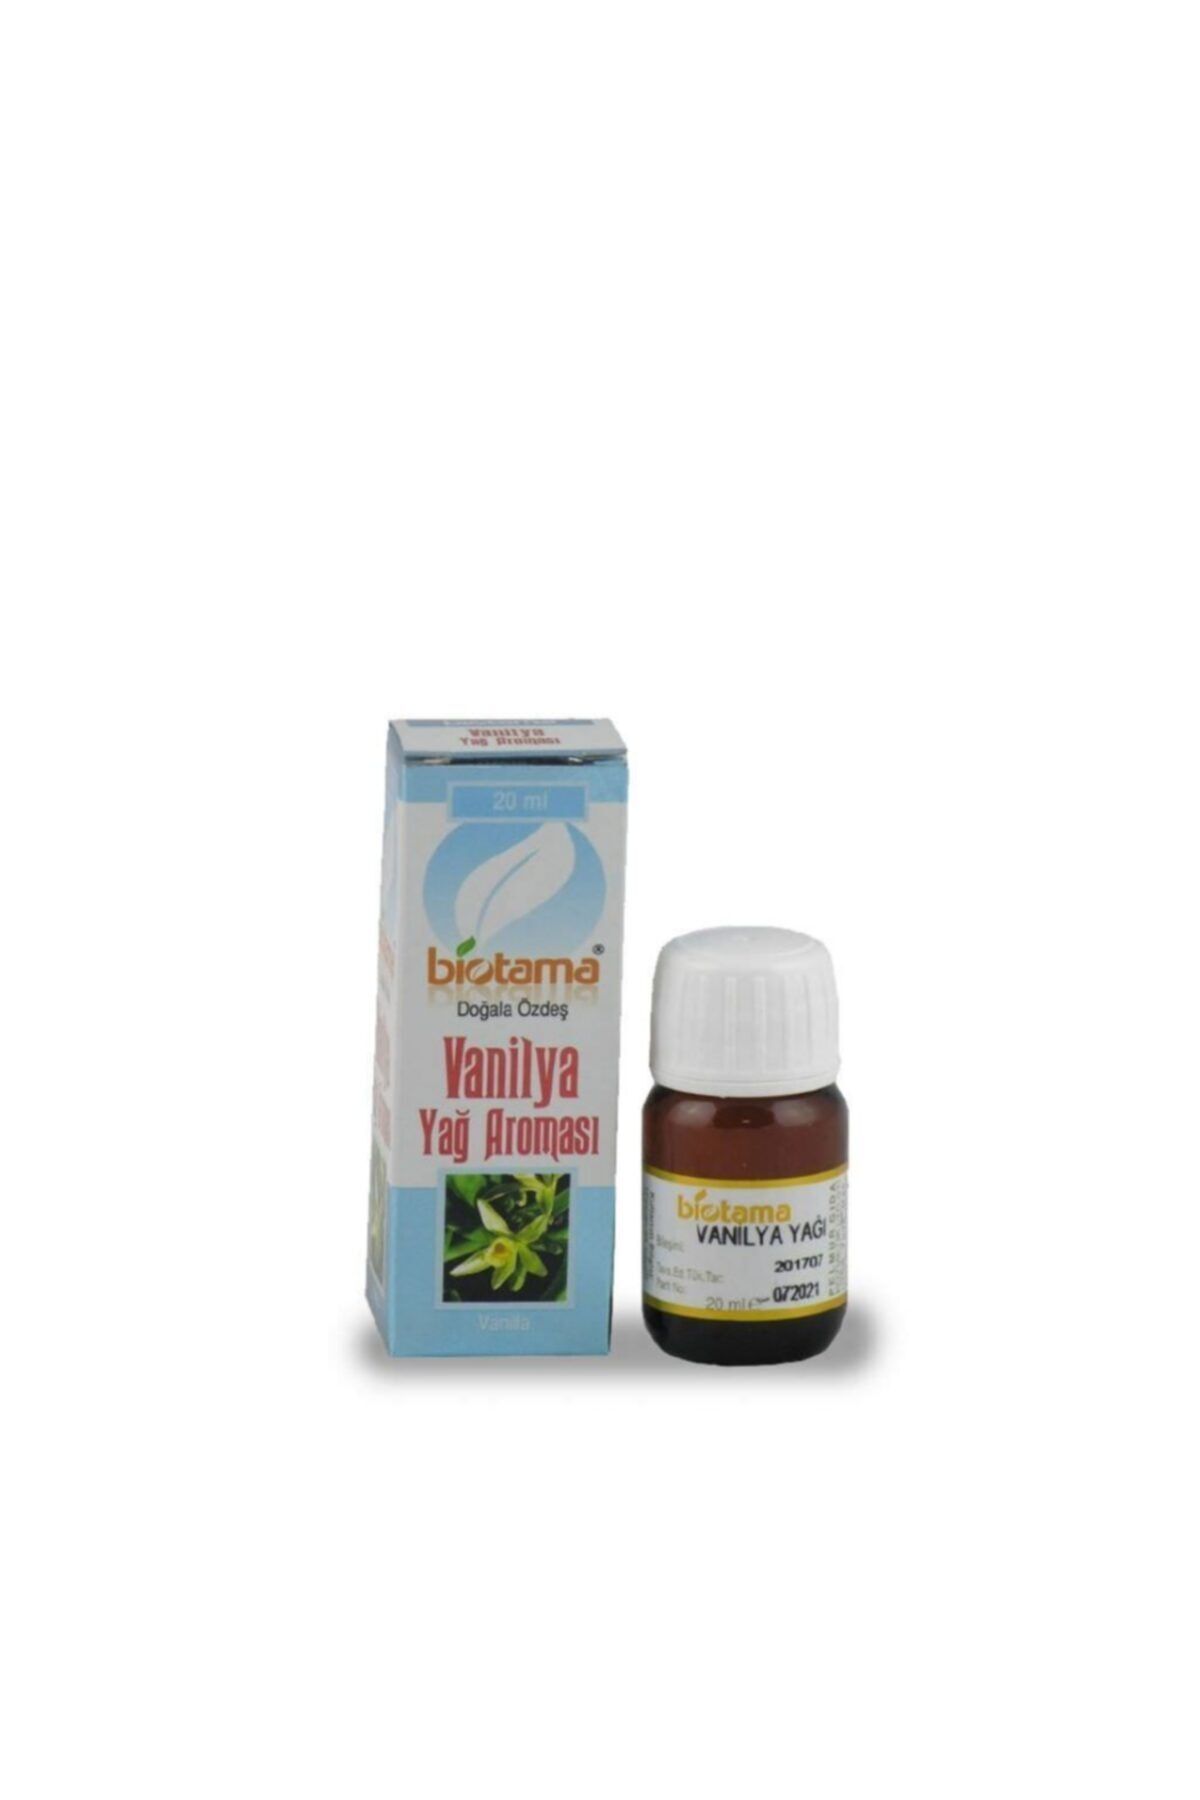 Biotama Vanilya Aroma Yağı 20 ml